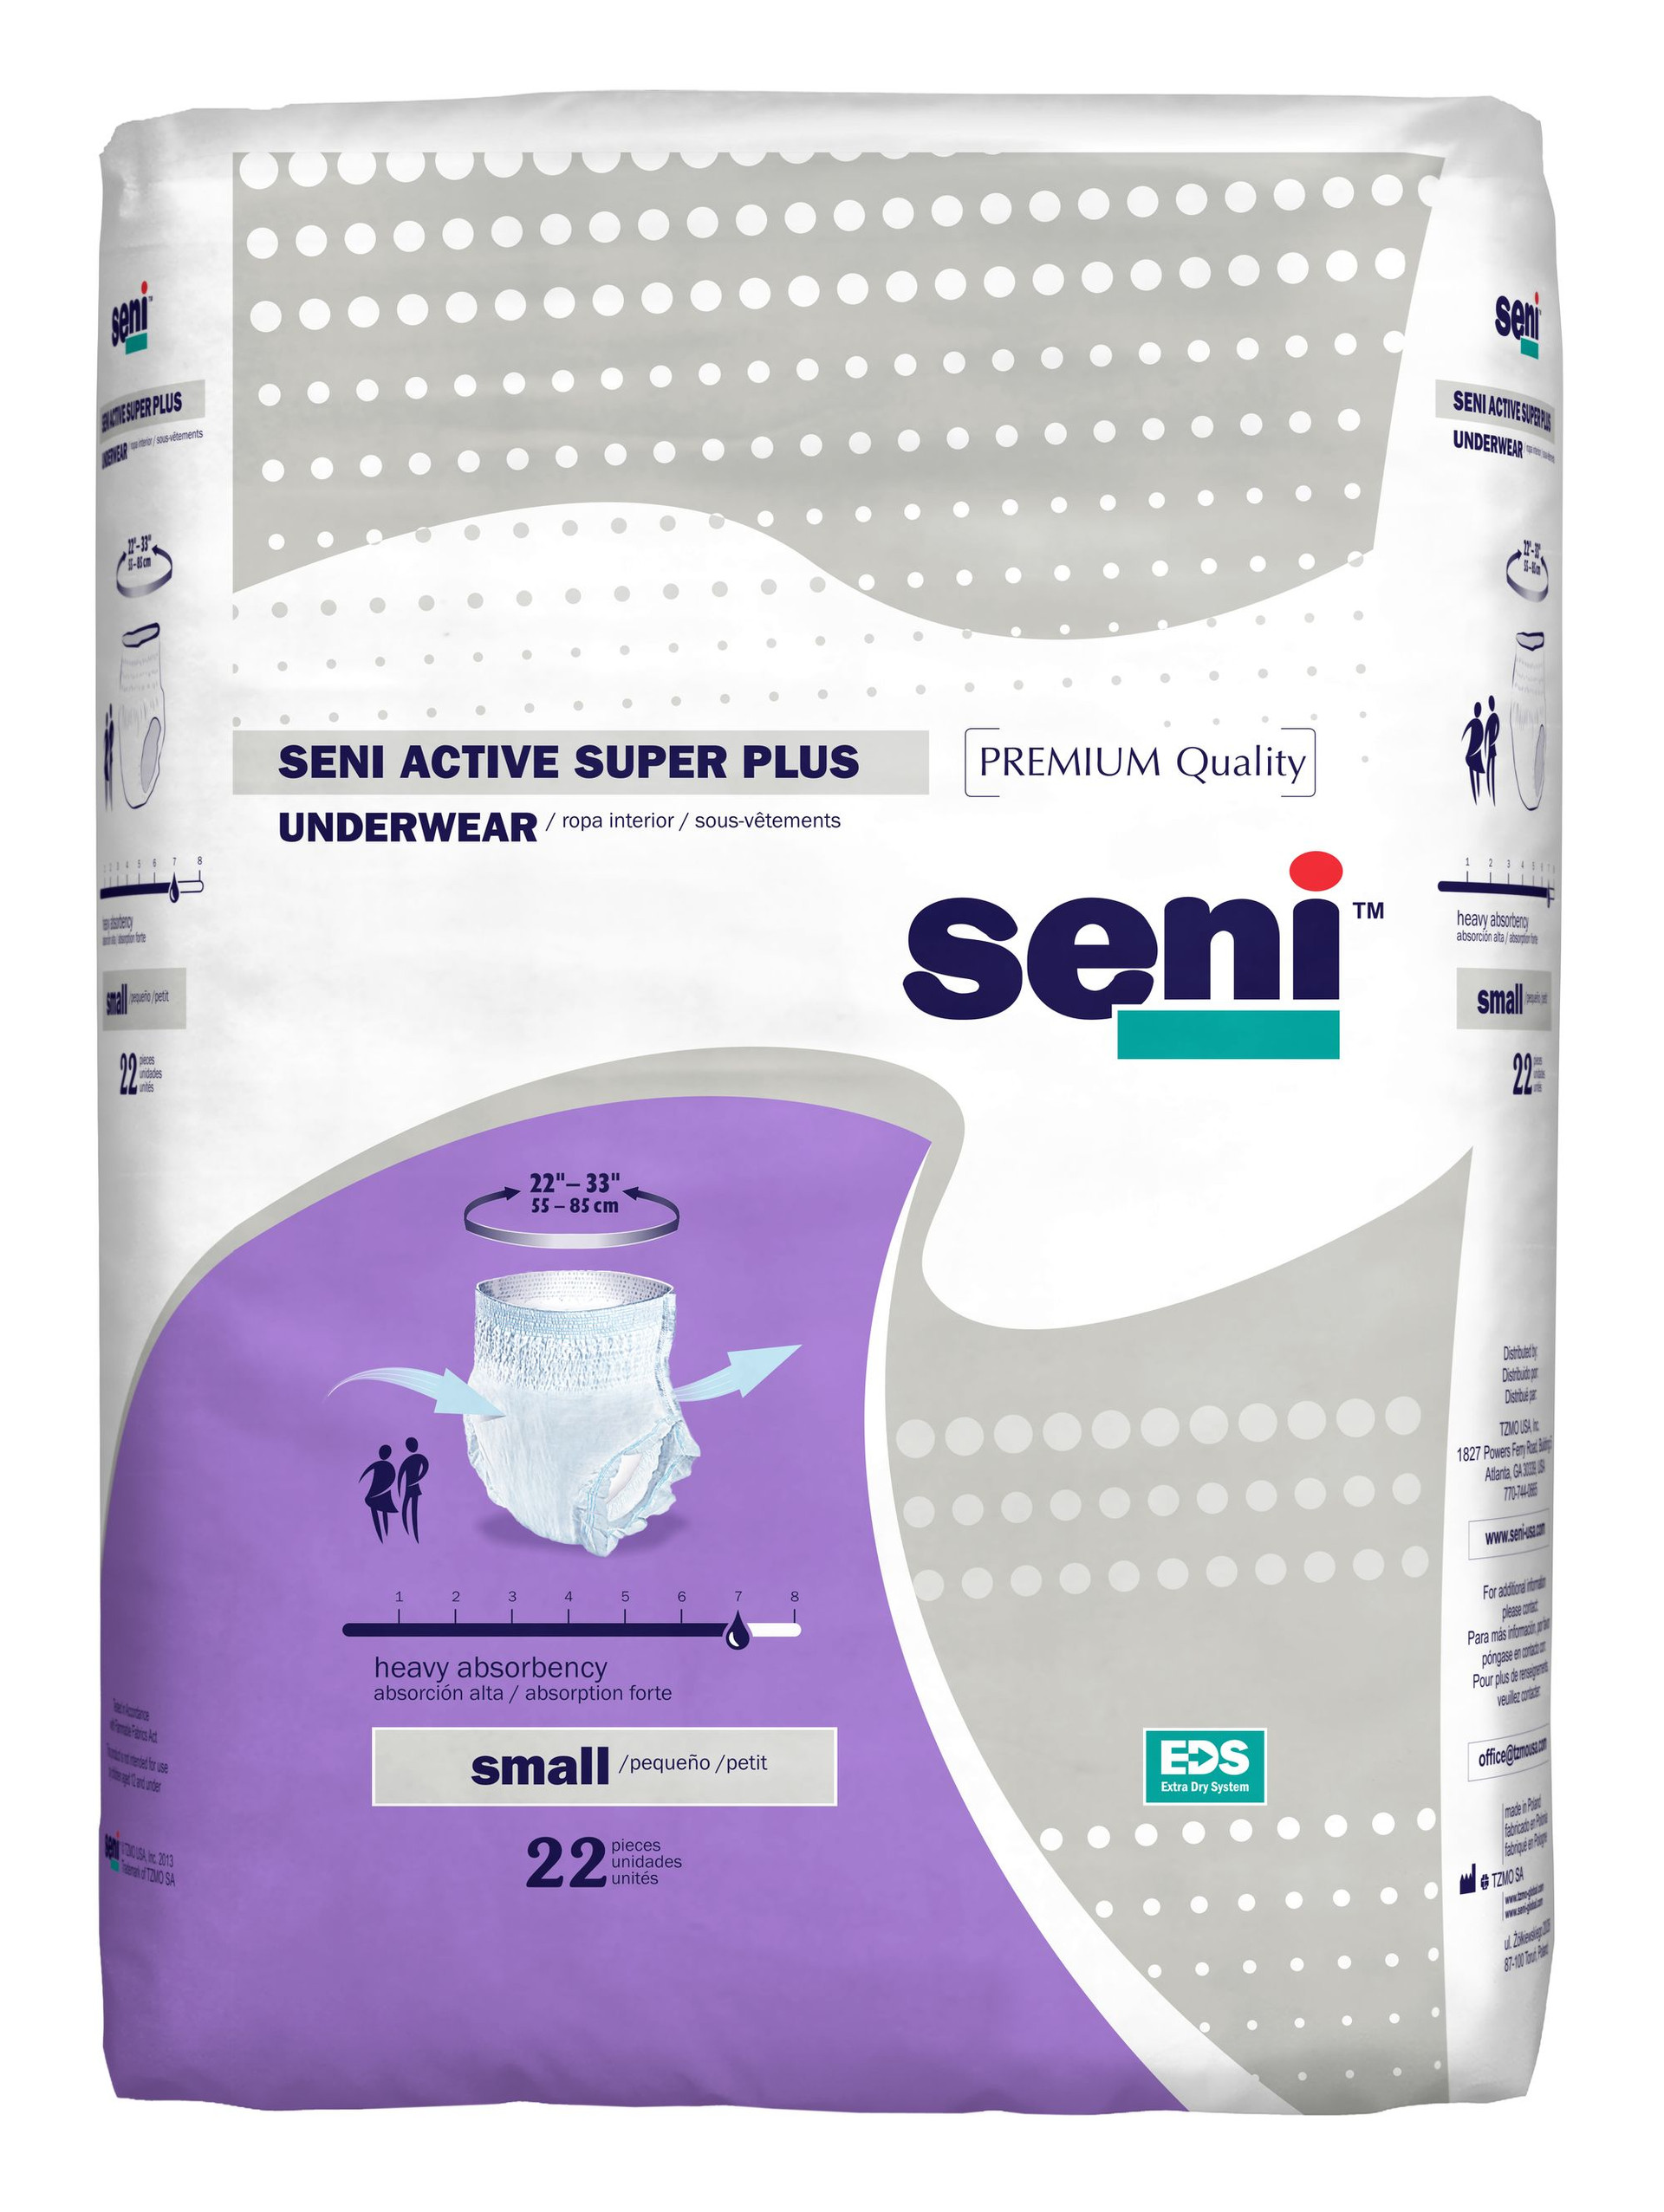 Seni Active Super Plus Underwear Small case of 88 (4 - 22ct packs